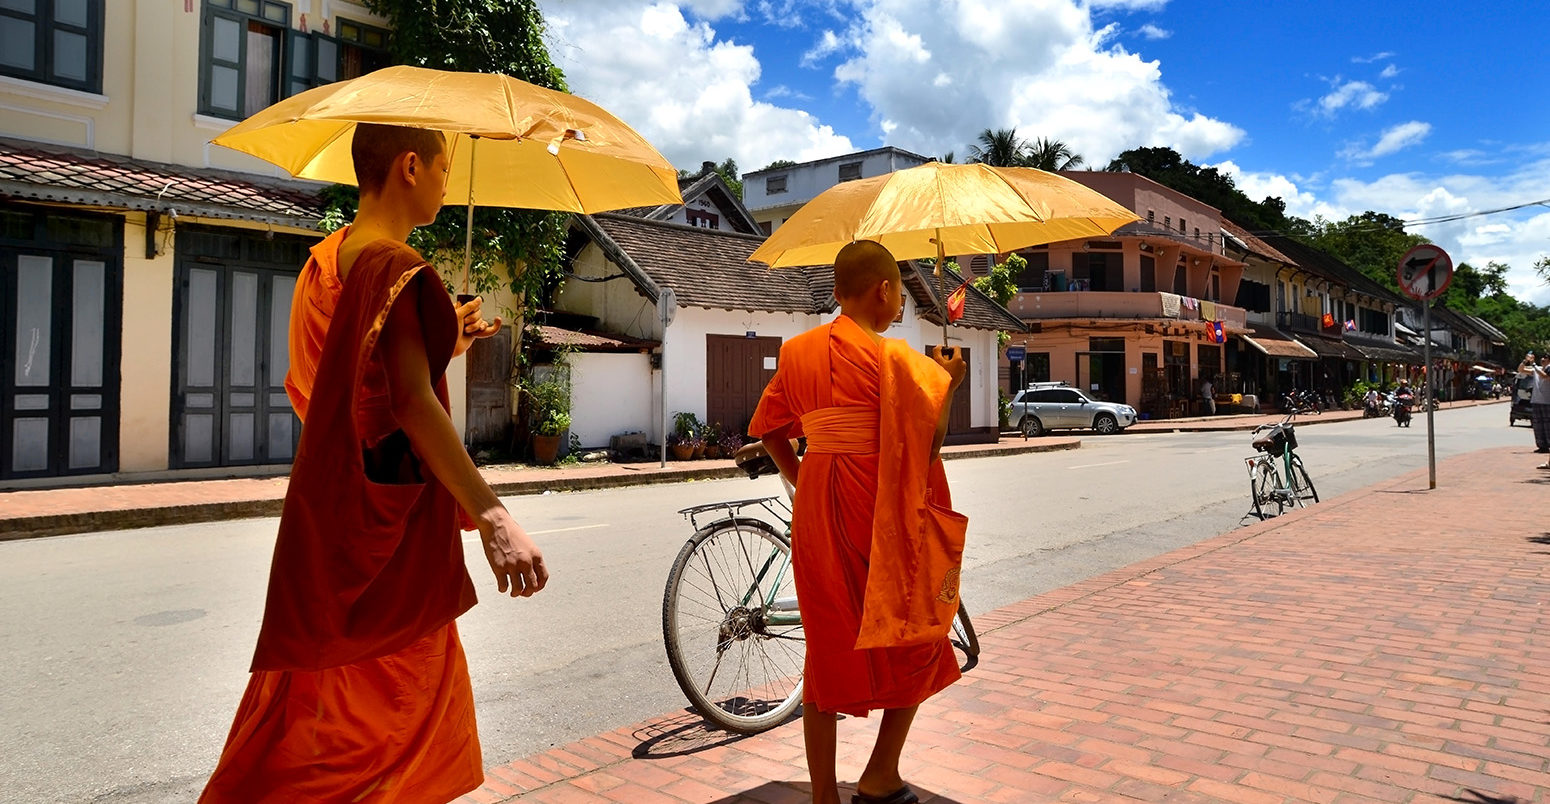 Two monks shading from the sun in Loungprabang, Laos. Credit: Nopadol Uengbunchoo / Alamy Stock Photo. HWPG36